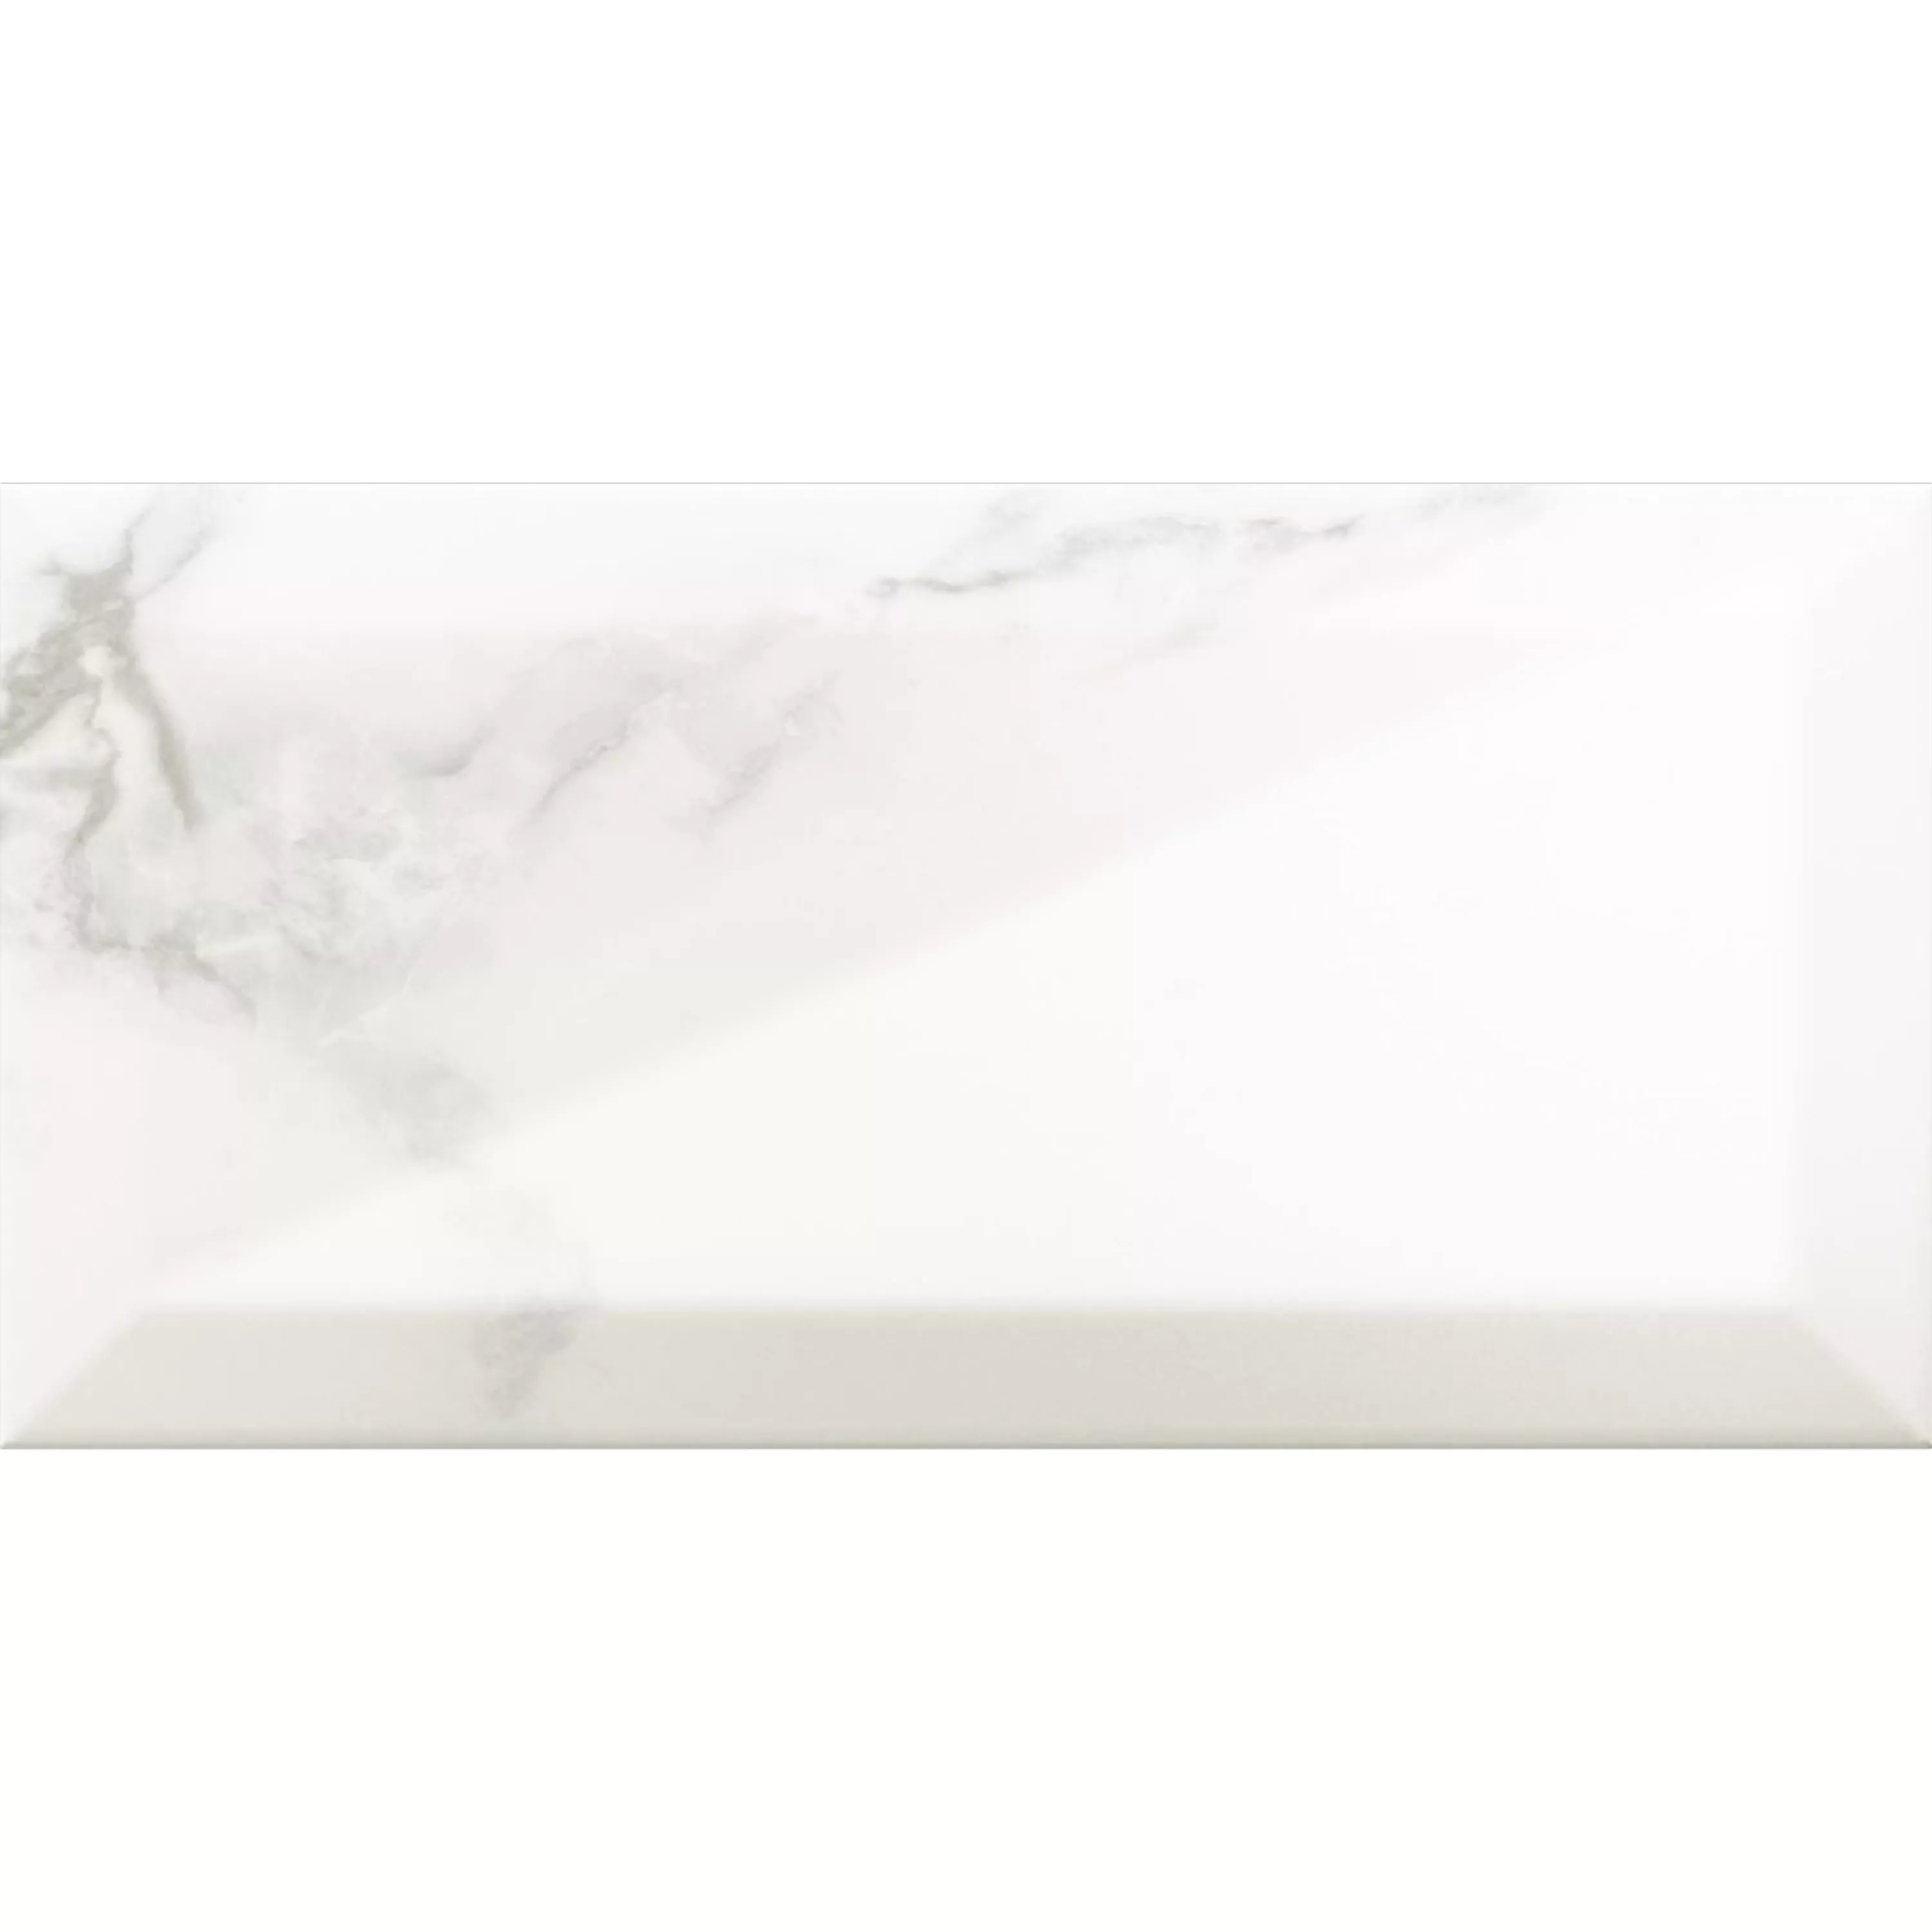 Metro Wandfliesen Girona Marmoroptik Facette Weiß Glänzend 10x20cm